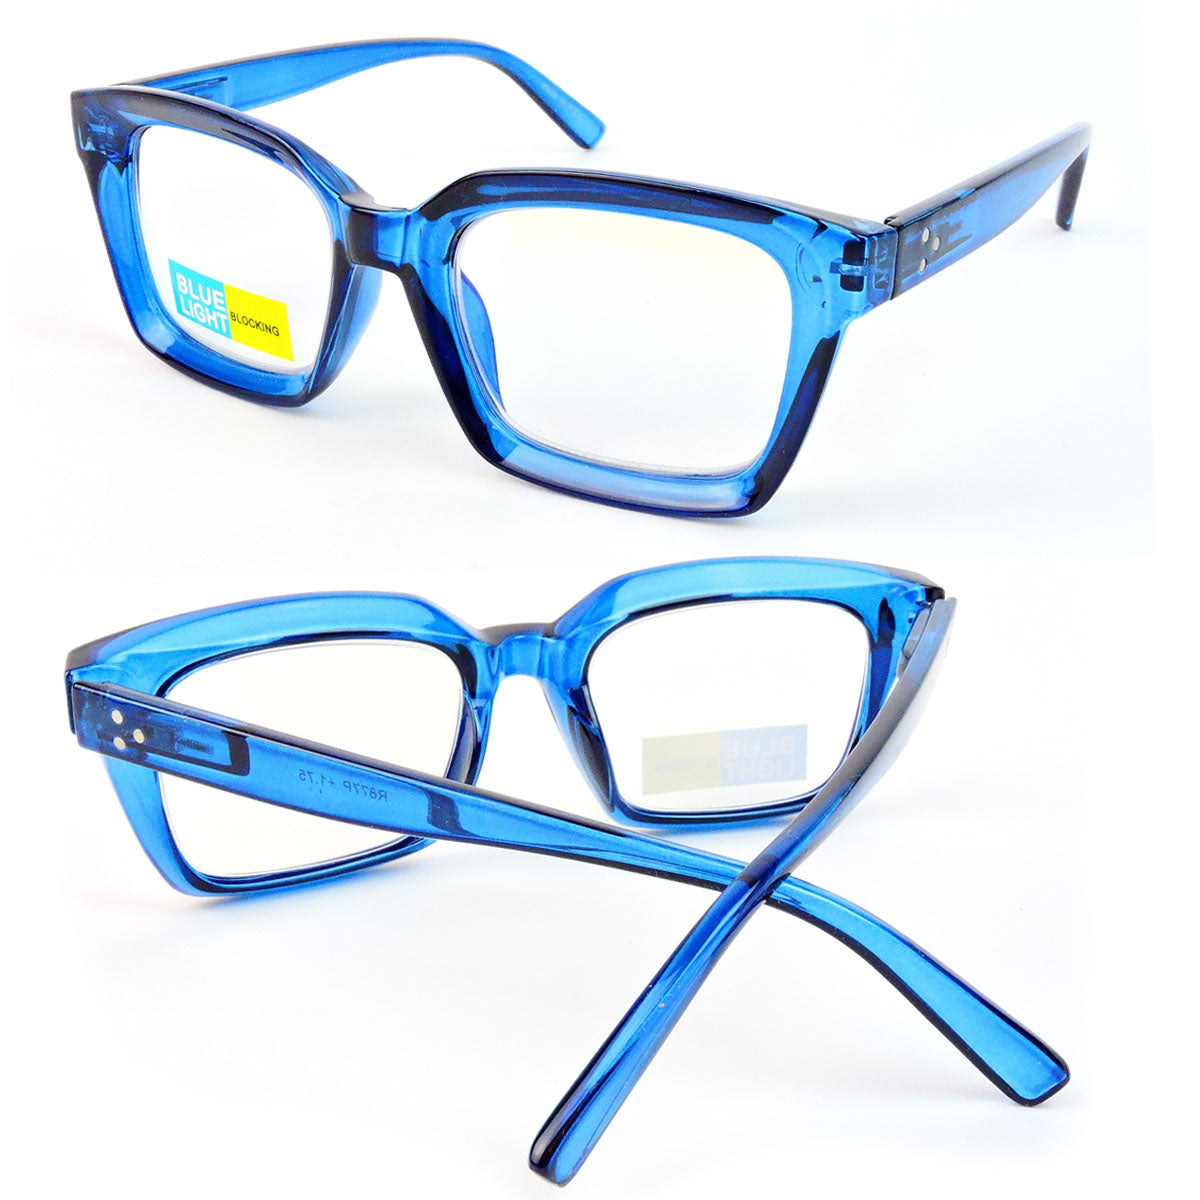 Blue Light Blocking Glasses Thick Rectangle Preppy Look - Reading Glasses - Tortoise, +2.00